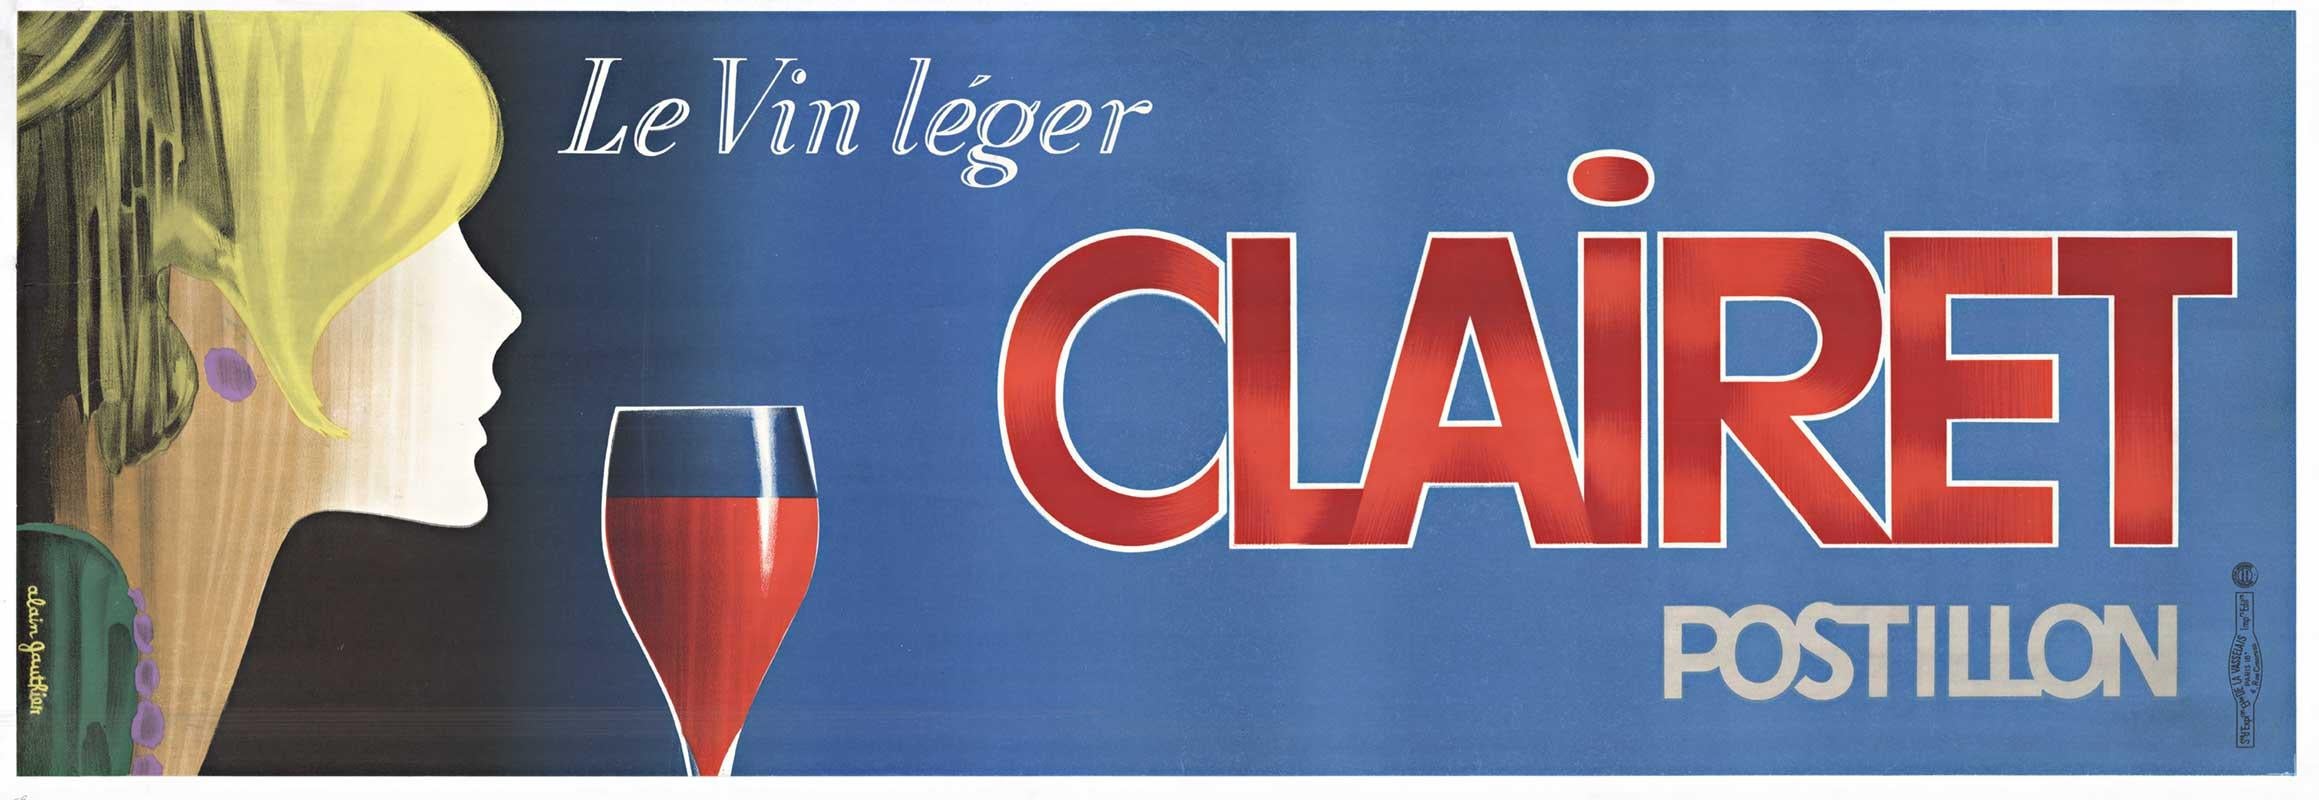 Original Clairet Postillon Le Vin Leger vintage French wine horizontal poster